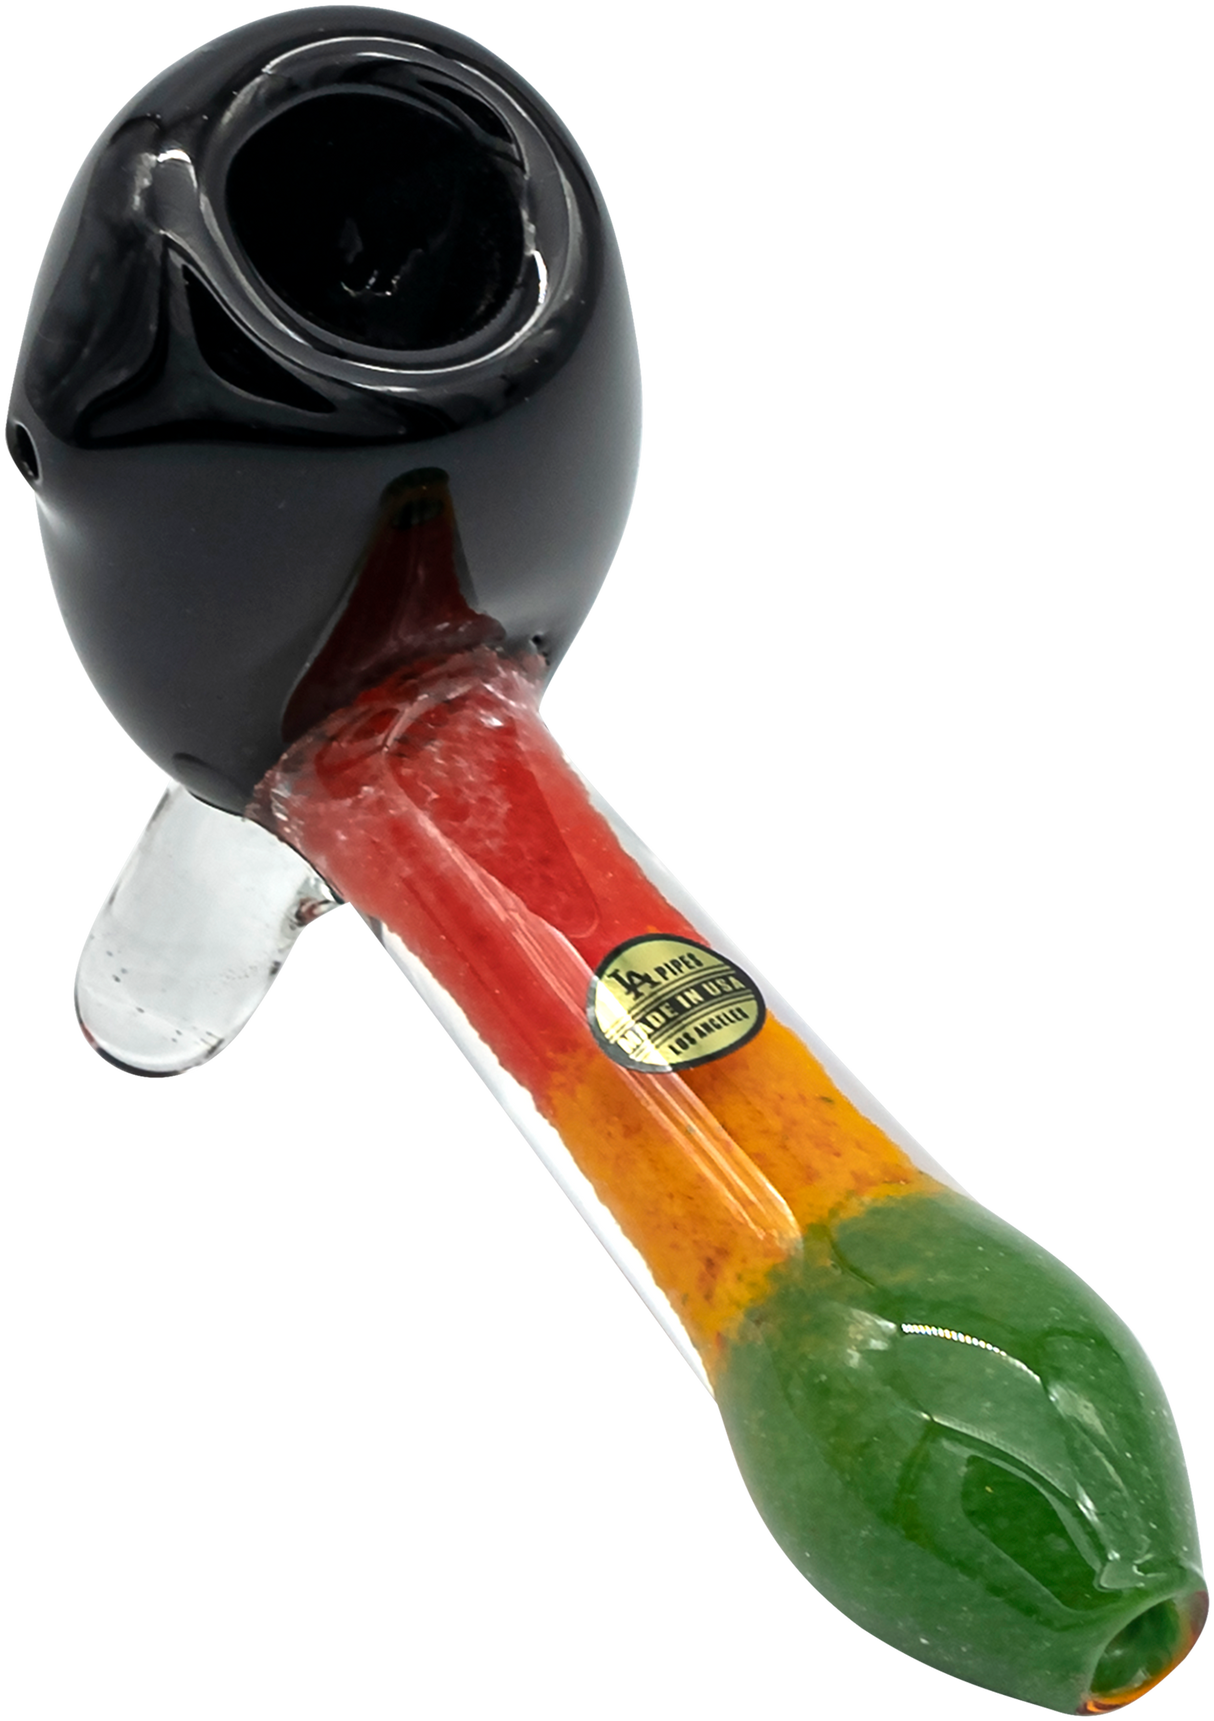 LA Pipes "Sattdown Rasta" Sherlock Glass Pipe with Rasta Colors, Angled Side View